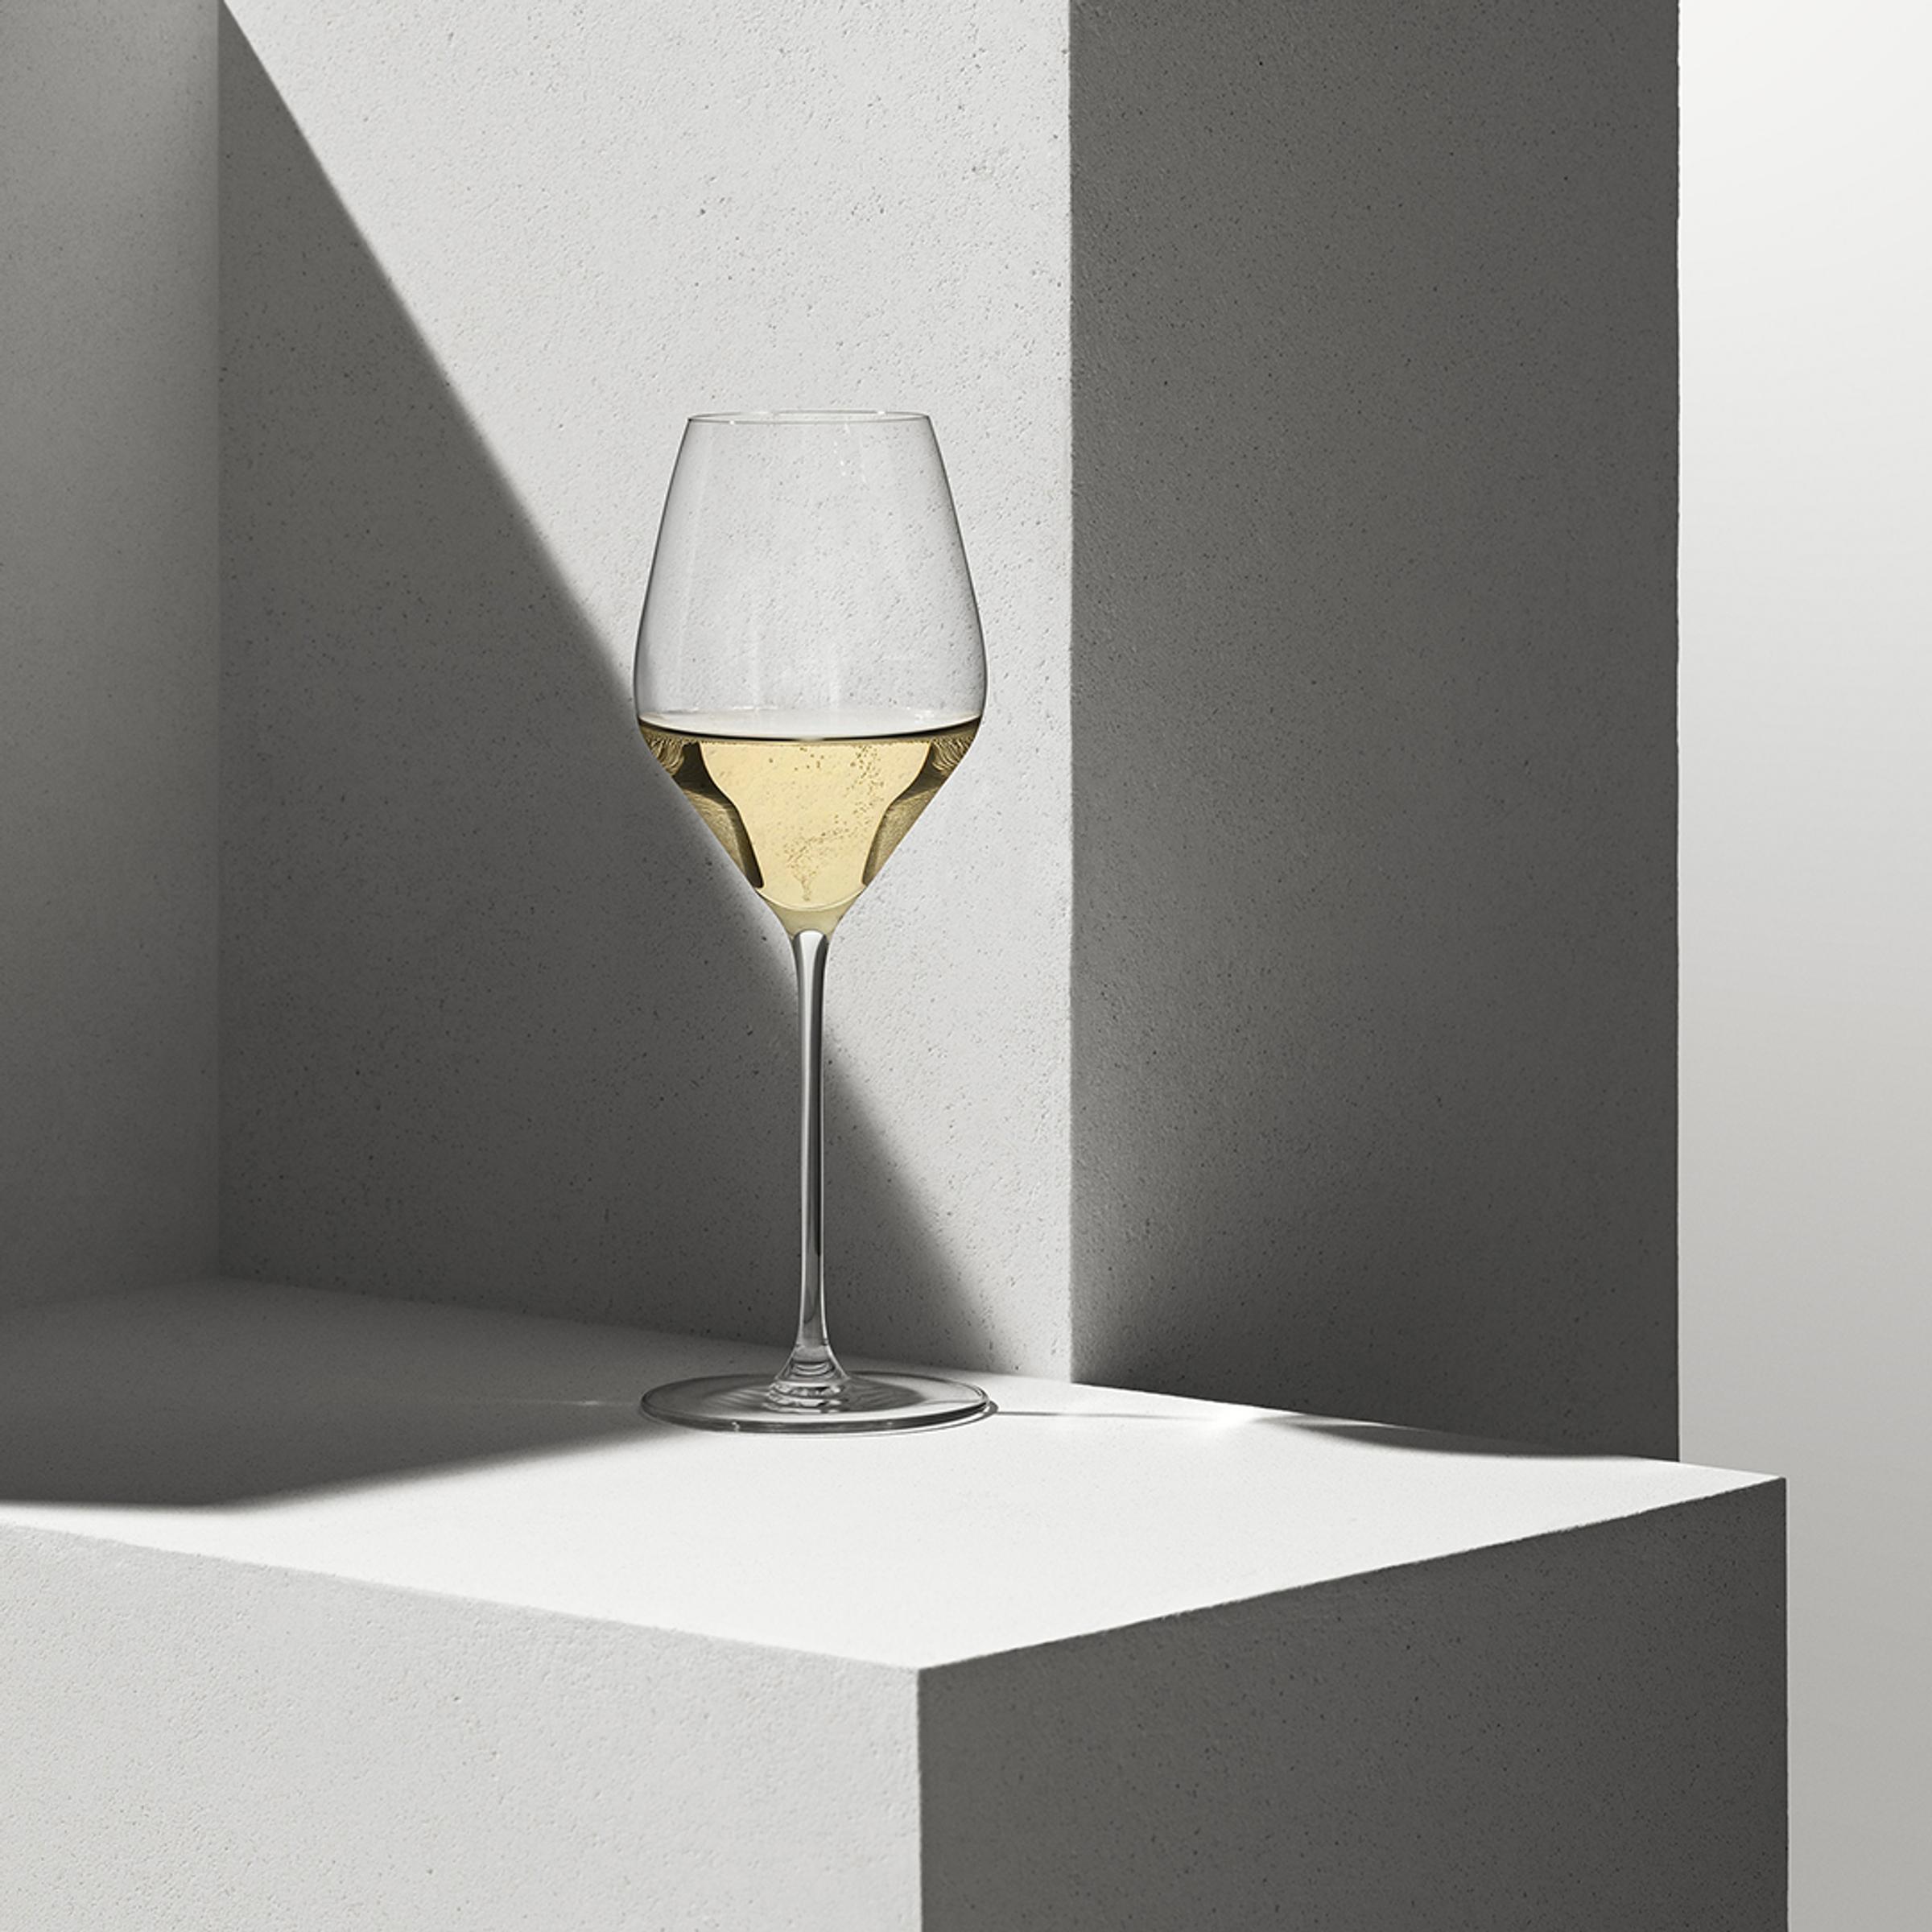 Moet & chandon dom perignon champagne vintage 2012 - xtrawine FR